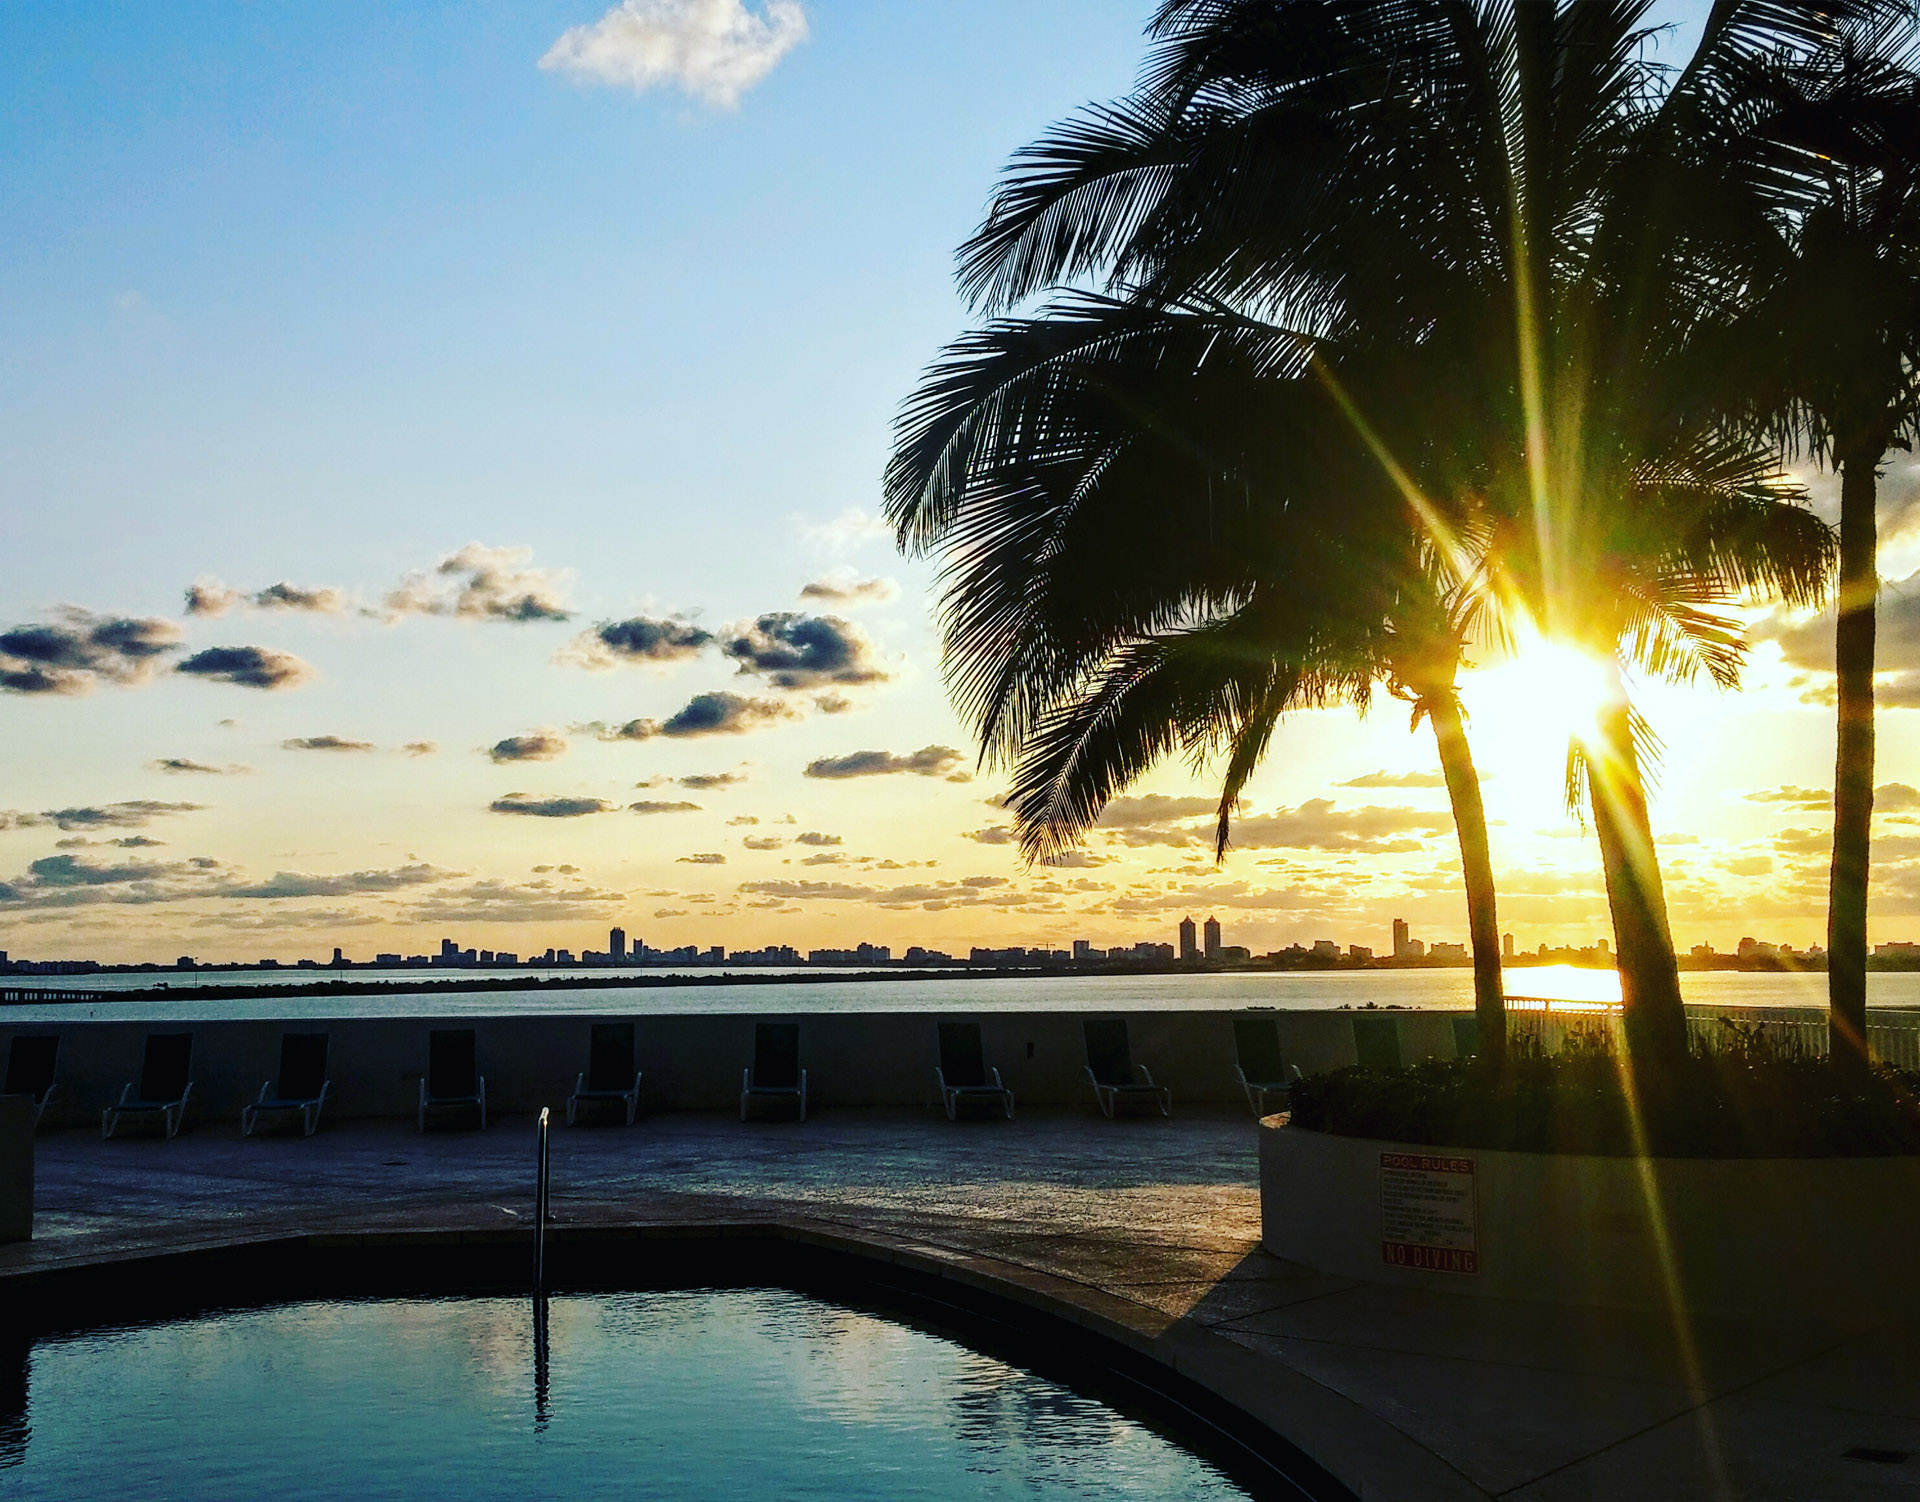 Florida - from sunrise to sunset!